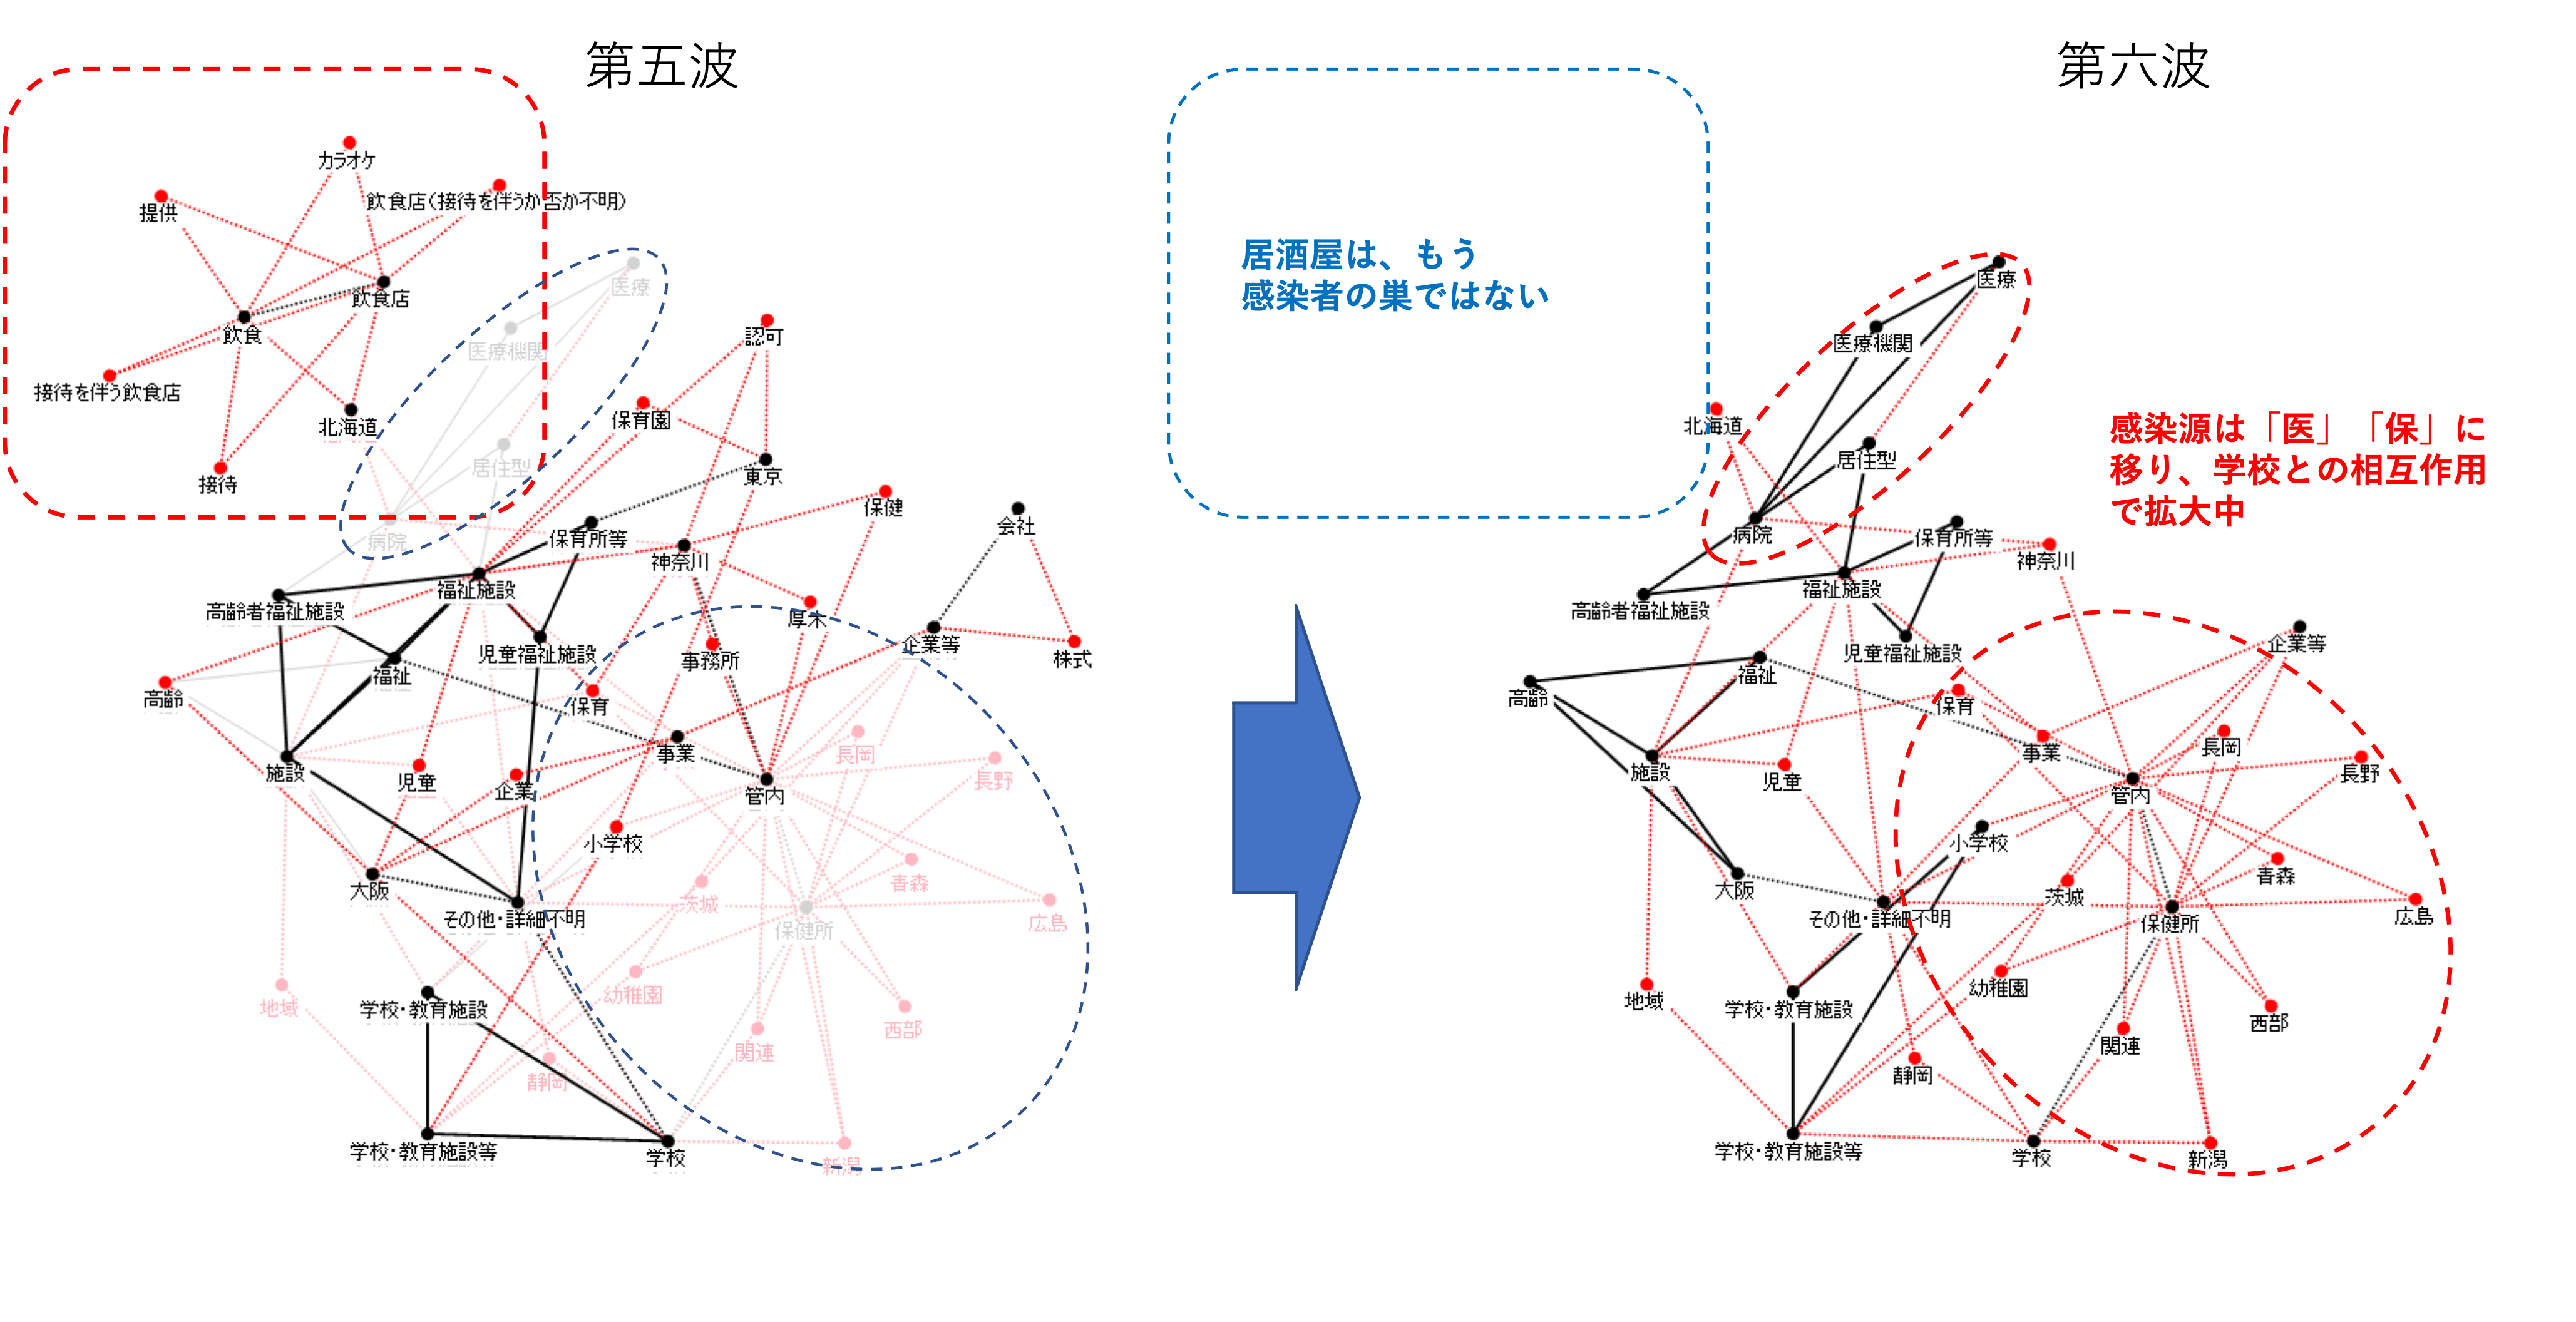 KeyGraph: 黒（●）ノードは高頻度、赤（●）ノードは低頻度でも橋渡す要素